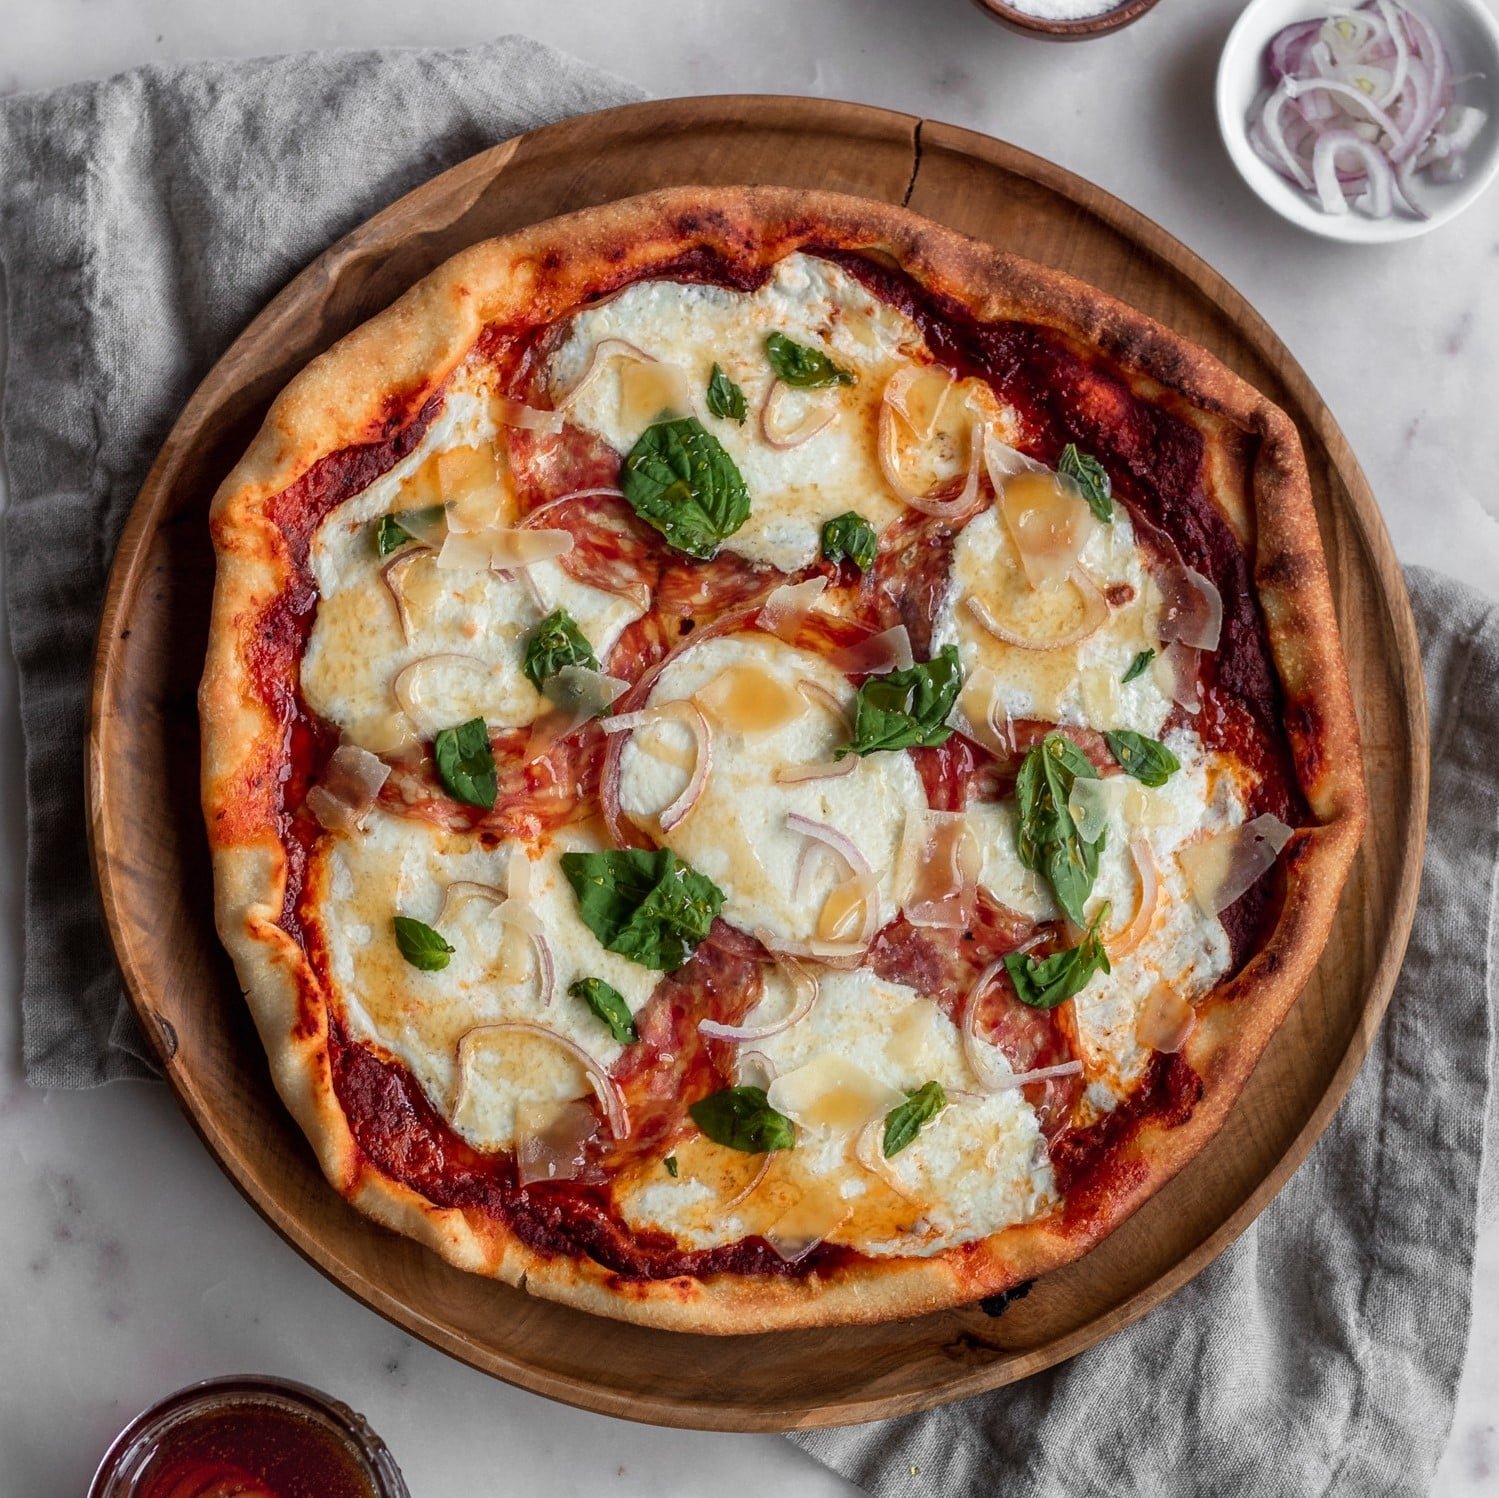 https://sundaytable.co/wp-content/uploads/2021/07/how-to-make-homemade-pizza-easy.jpg